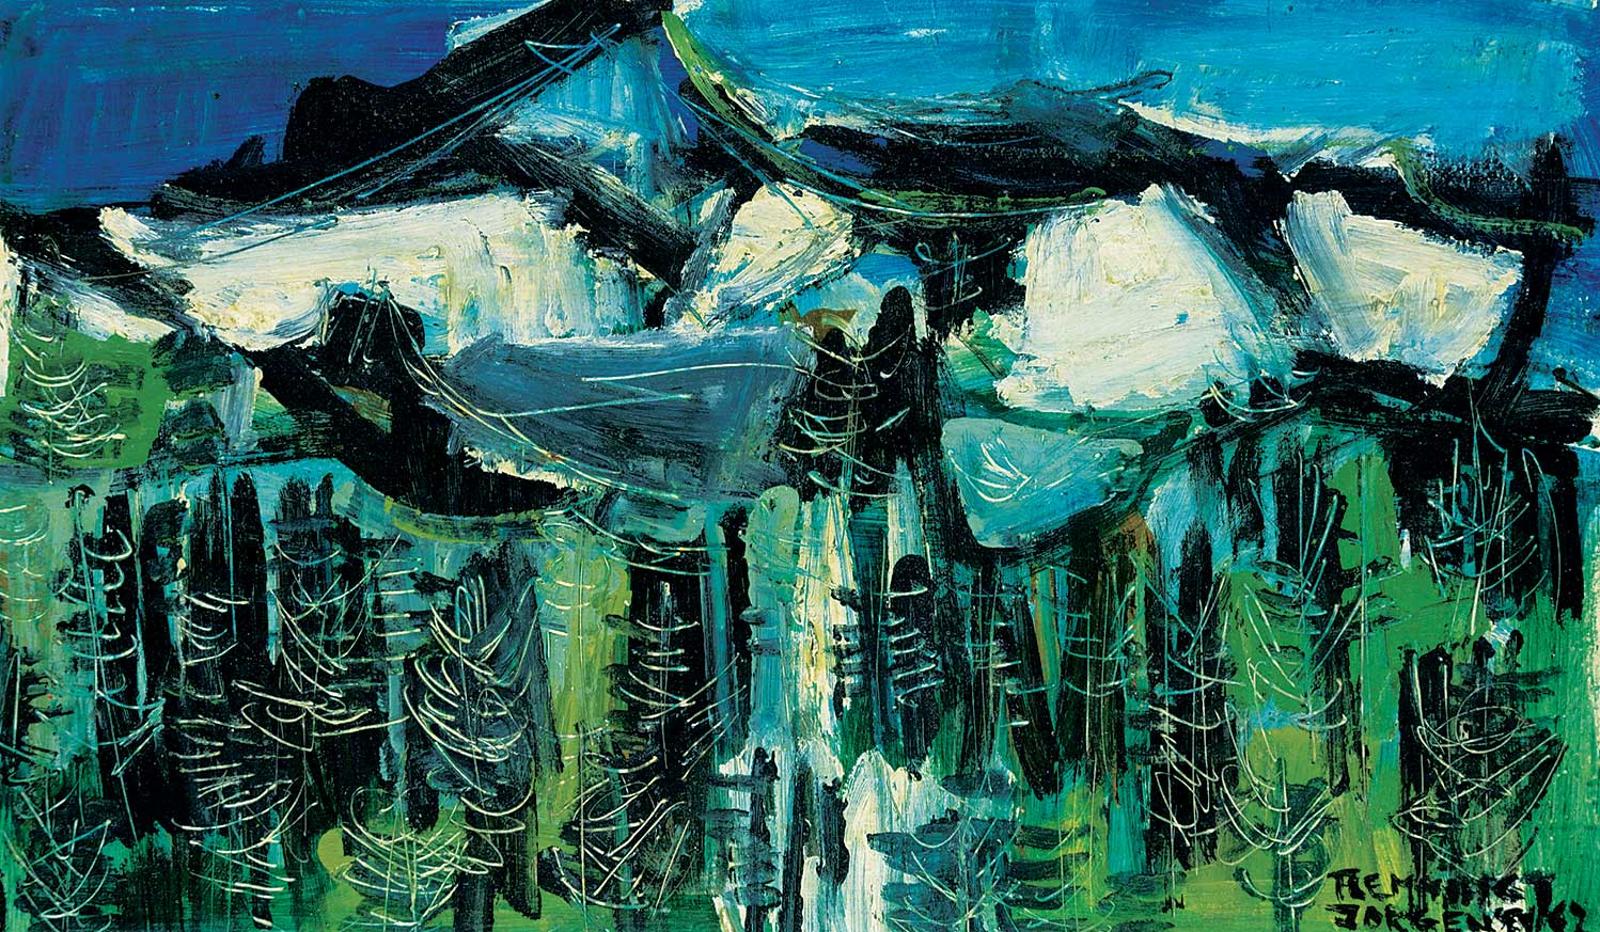 Flemming Jorgensen (1934-2009) - Mountains